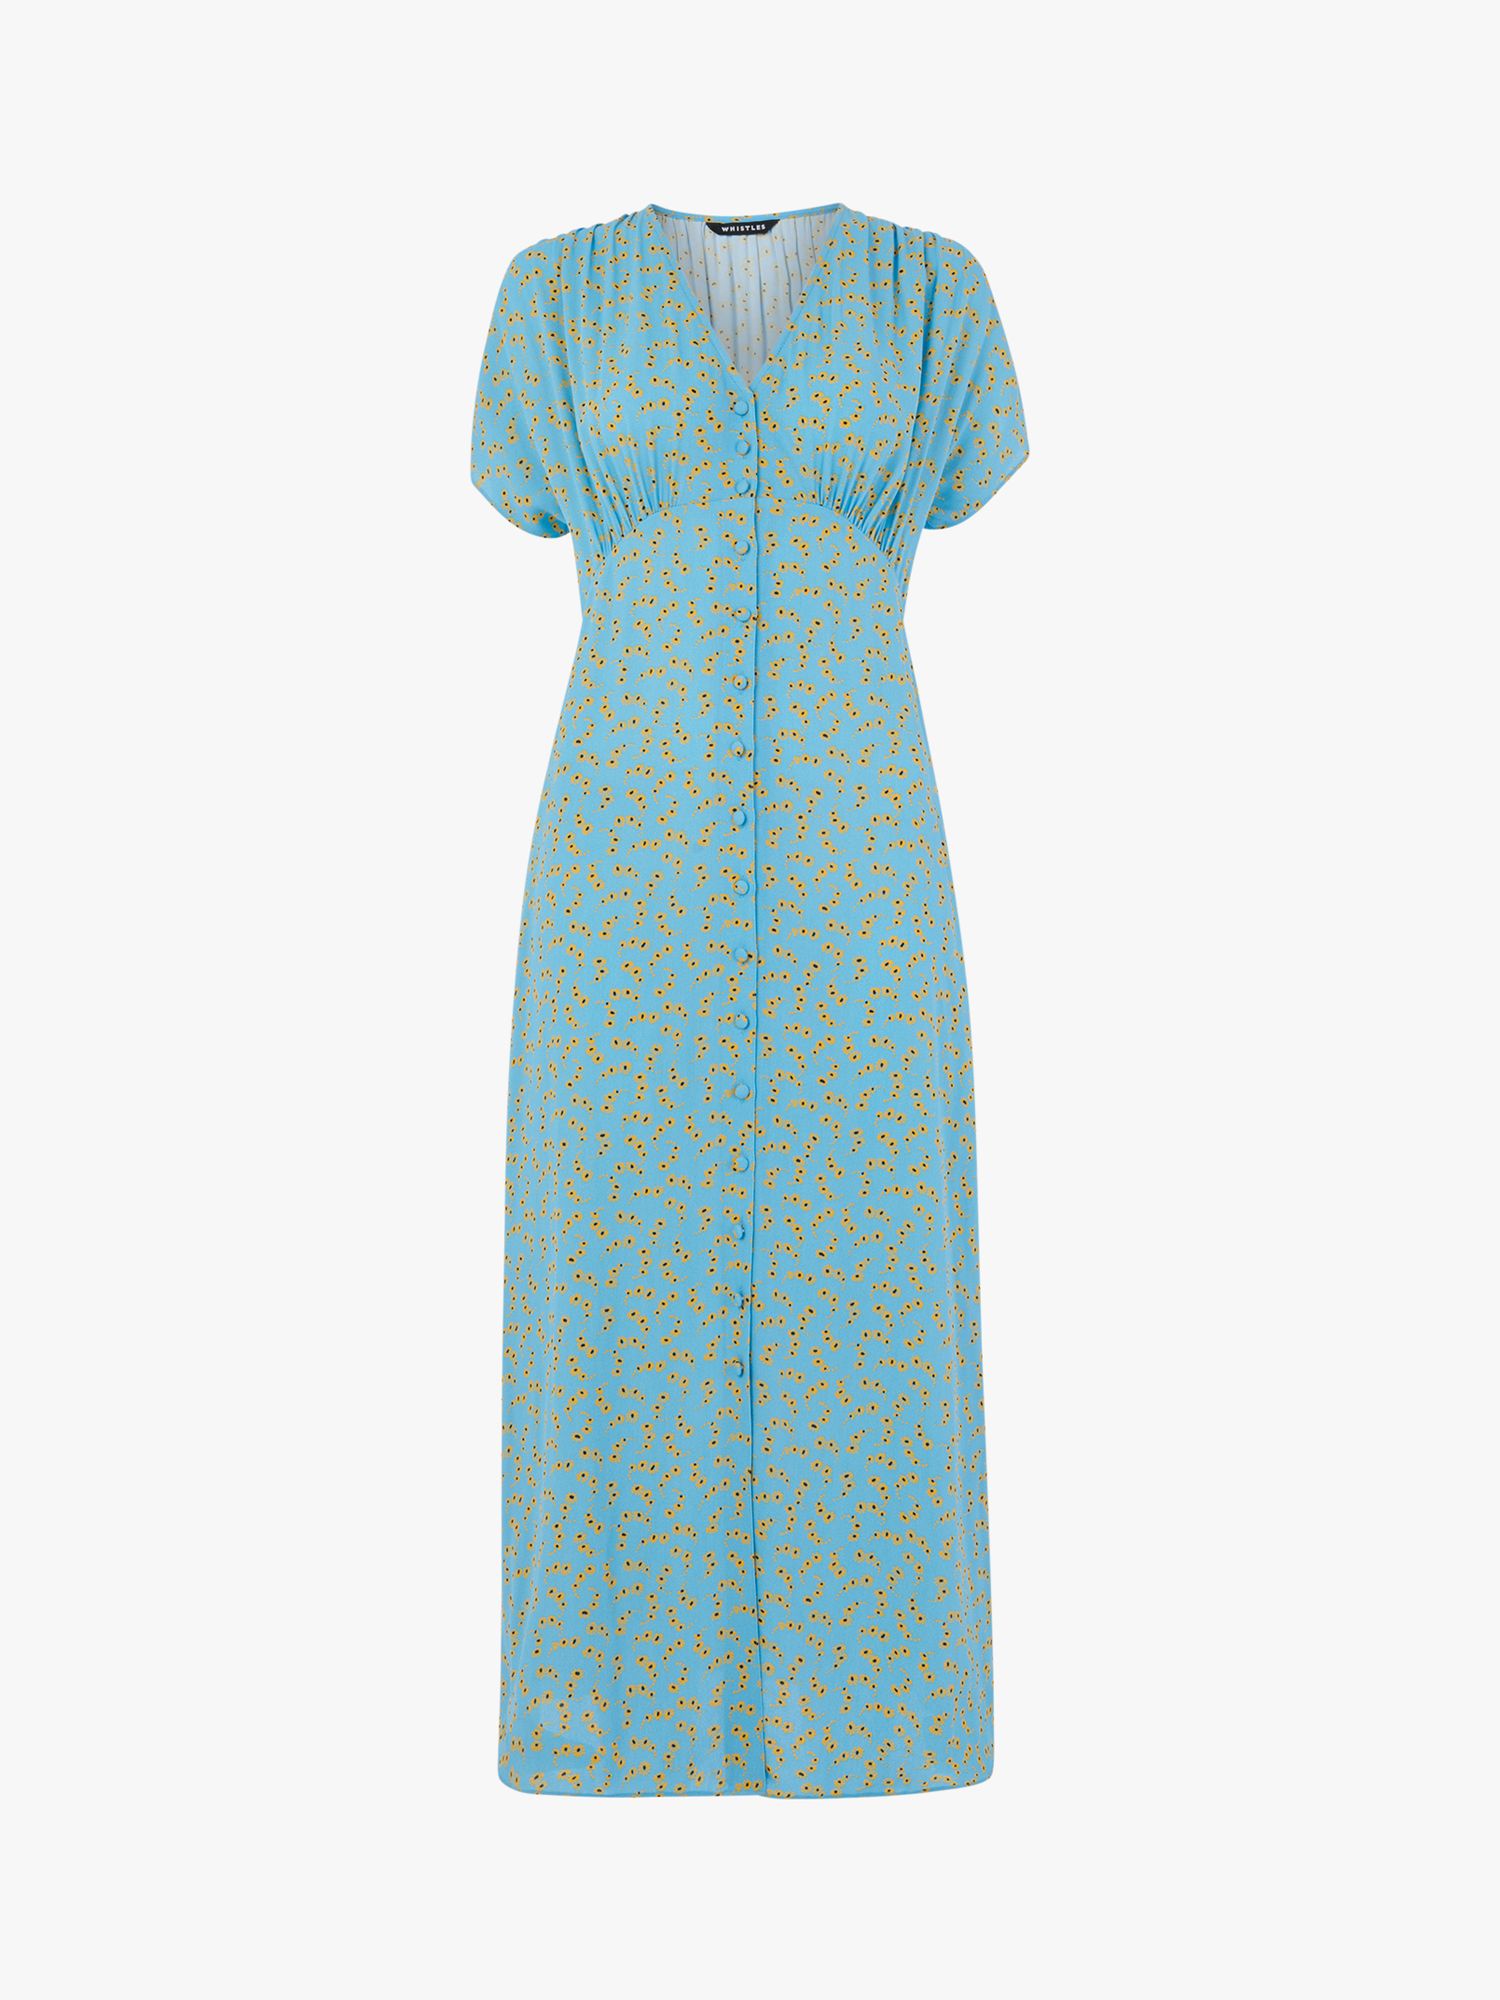 Whistles Floral Crescent Print Midi Dress, Blue/Multi, 6